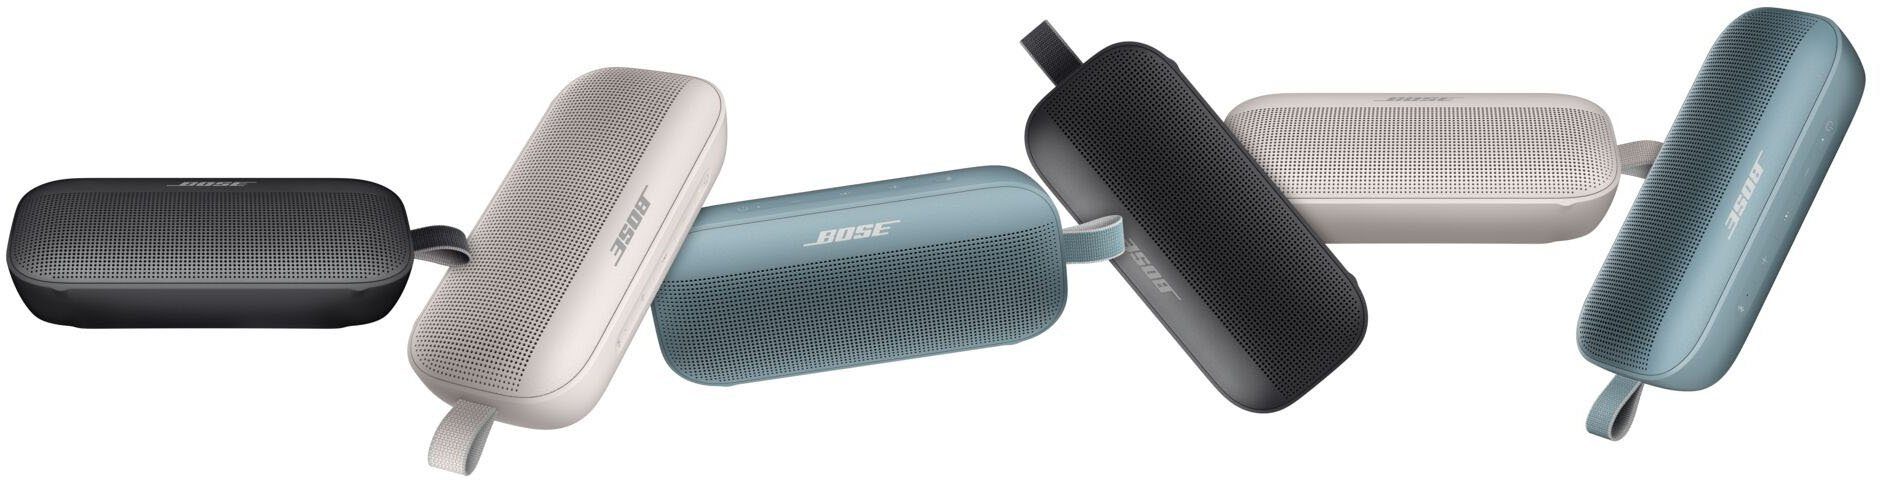 Flex (Bluetooth) Bose blau Stereo Lautsprecher SoundLink